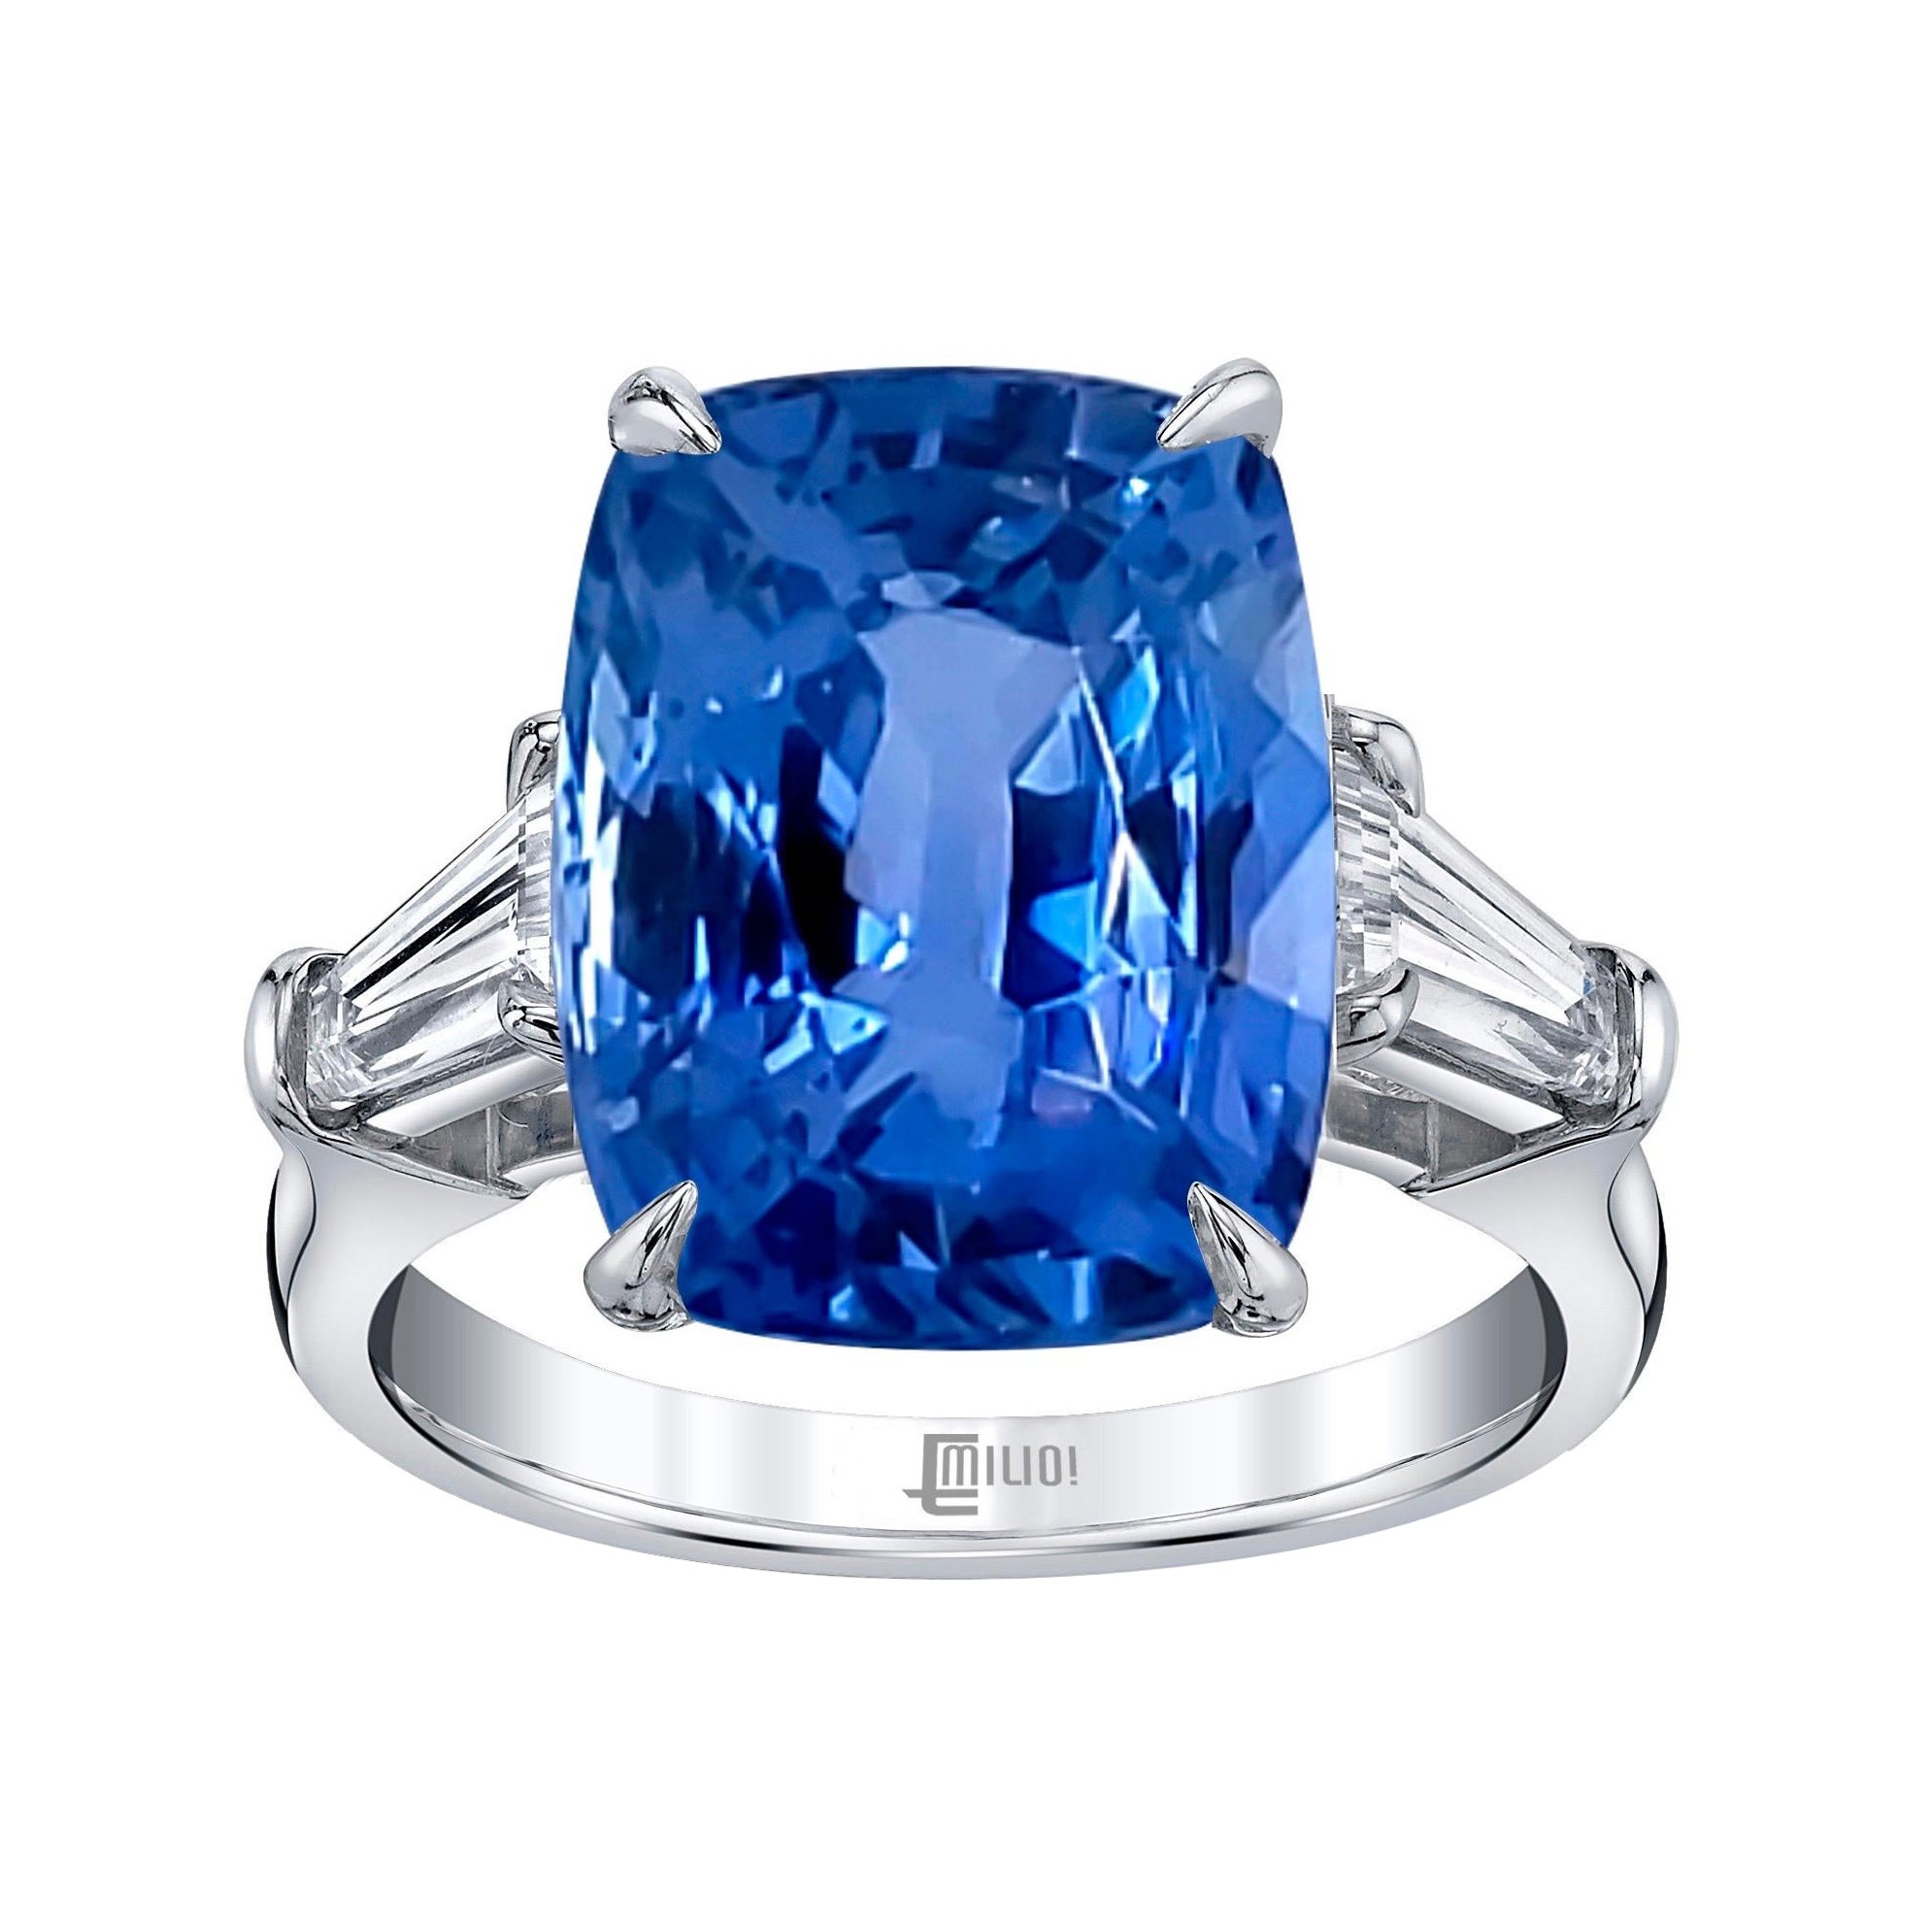 Emilio Jewelry Certified 3.70 Carat No Heat Ceylon Sapphire Ring